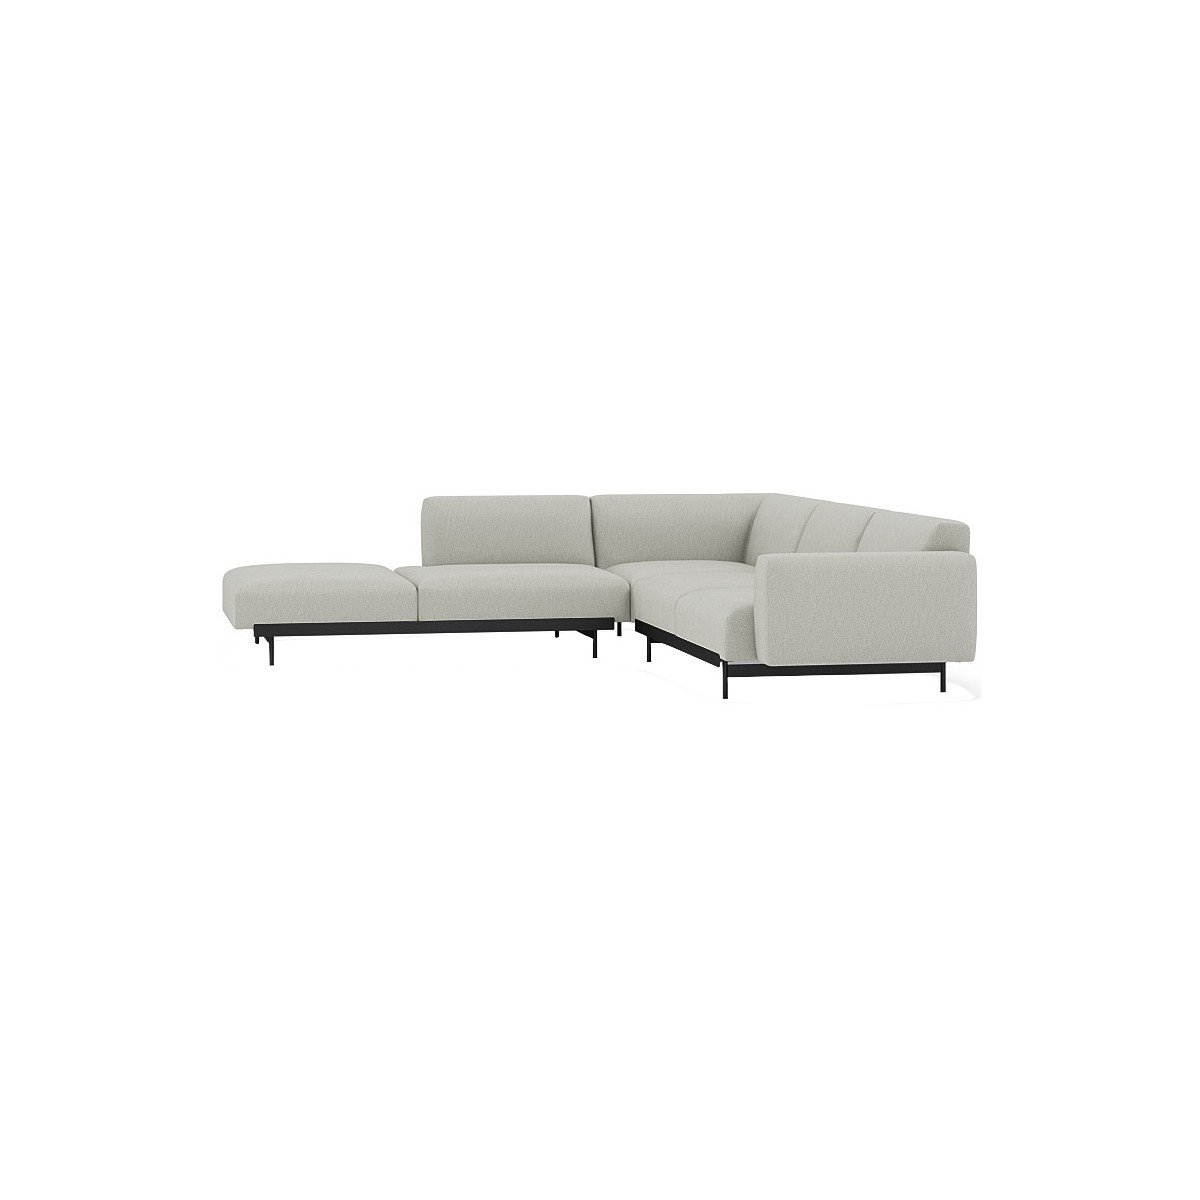 Clay 12 / black – In Situ corner sofa / configuration 2 – 287 x 287 cm